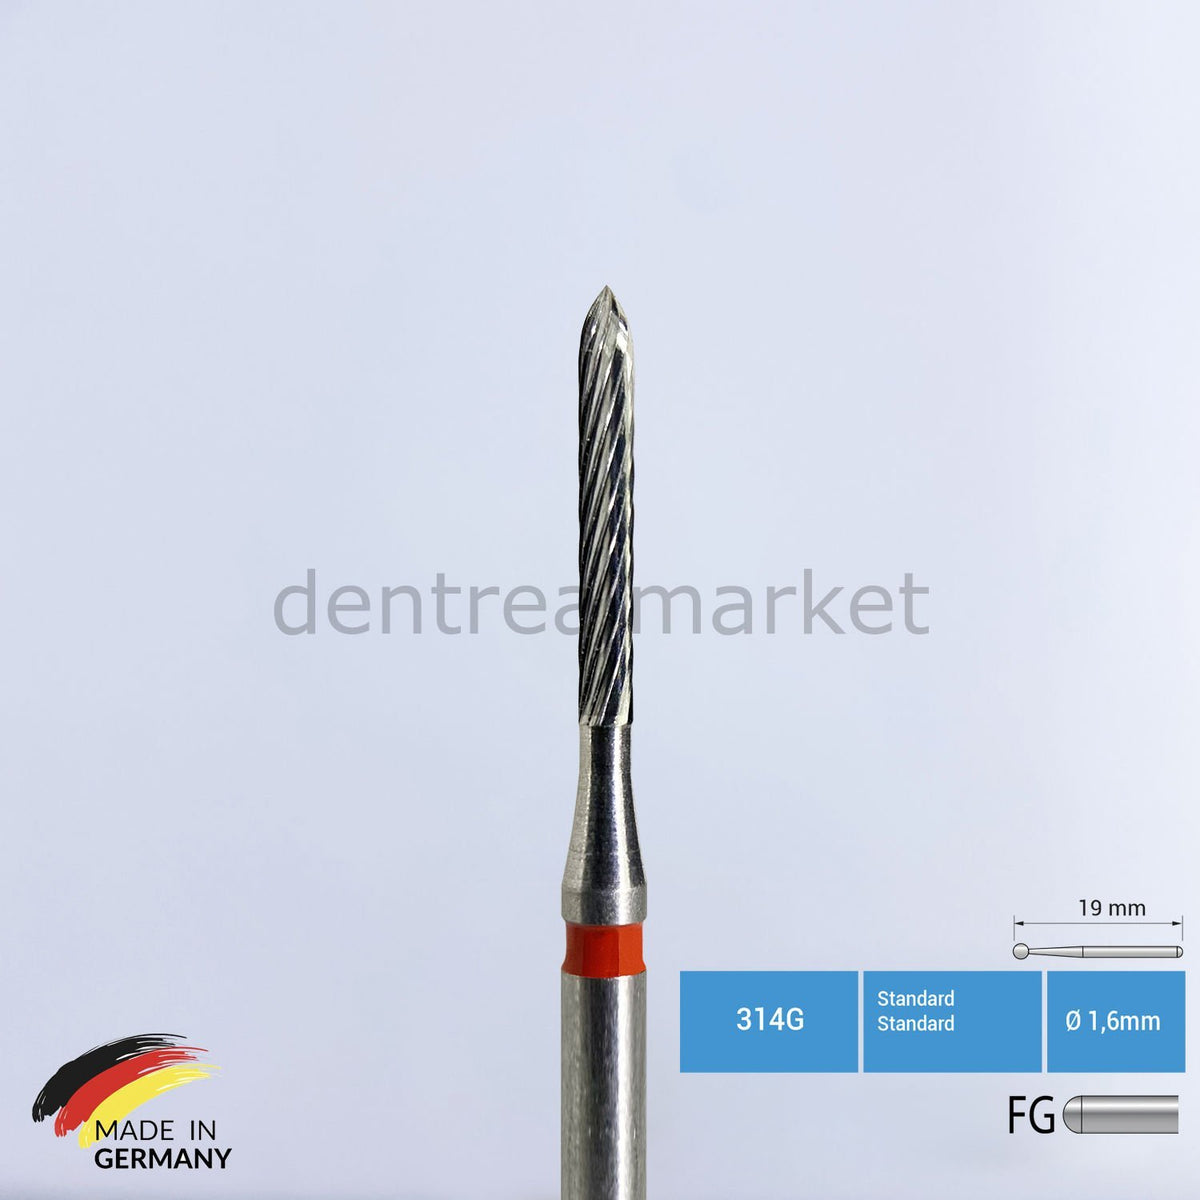 DentrealStore - Frank Dental Orthodontic Tungusten Carpide Adhesive Remover & Debonding Bur - C282 - For Air Turbine